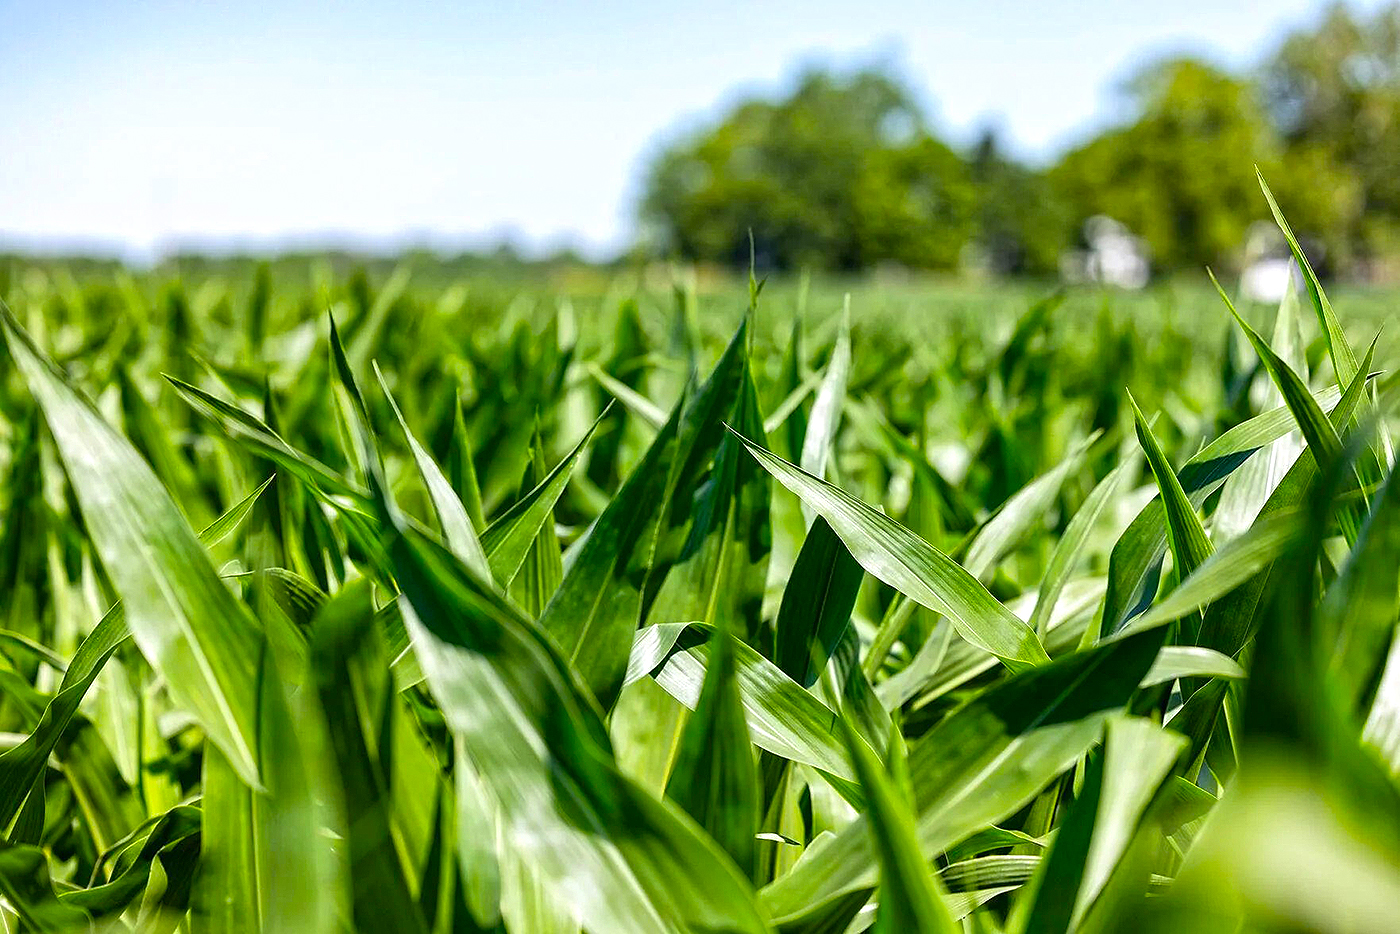 In Illinois, corn acreage has declined, soybean acreage has increased